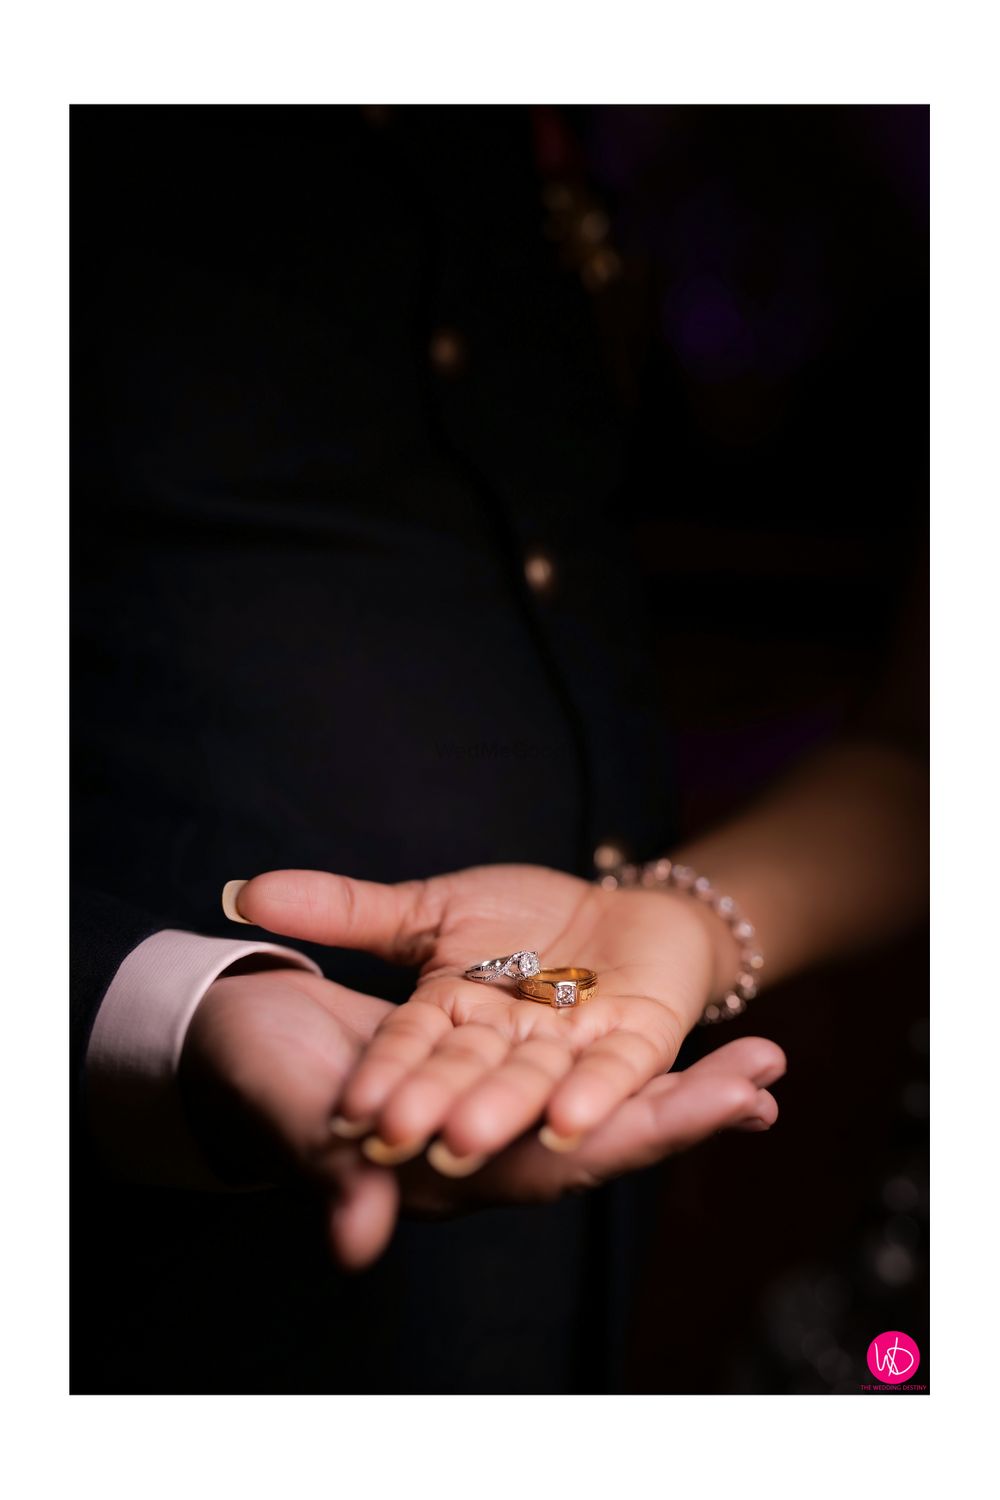 Photo From Preeti weds Rohan - The Wedding Destiny - By The Wedding Destiny